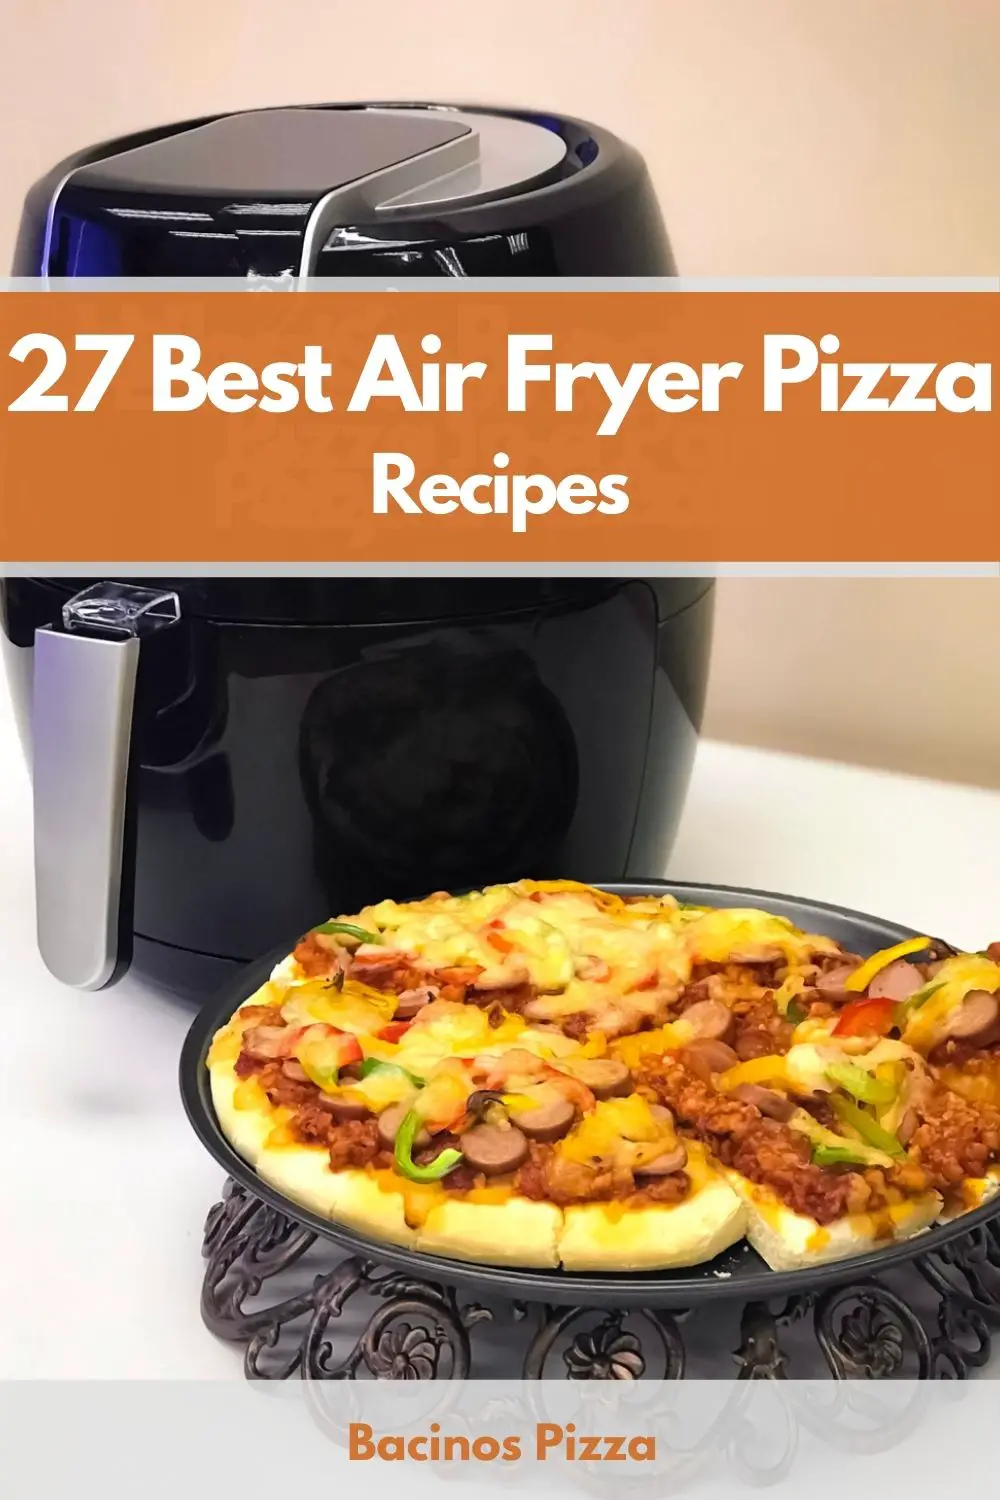 27 Best Air Fryer Pizza Recipes